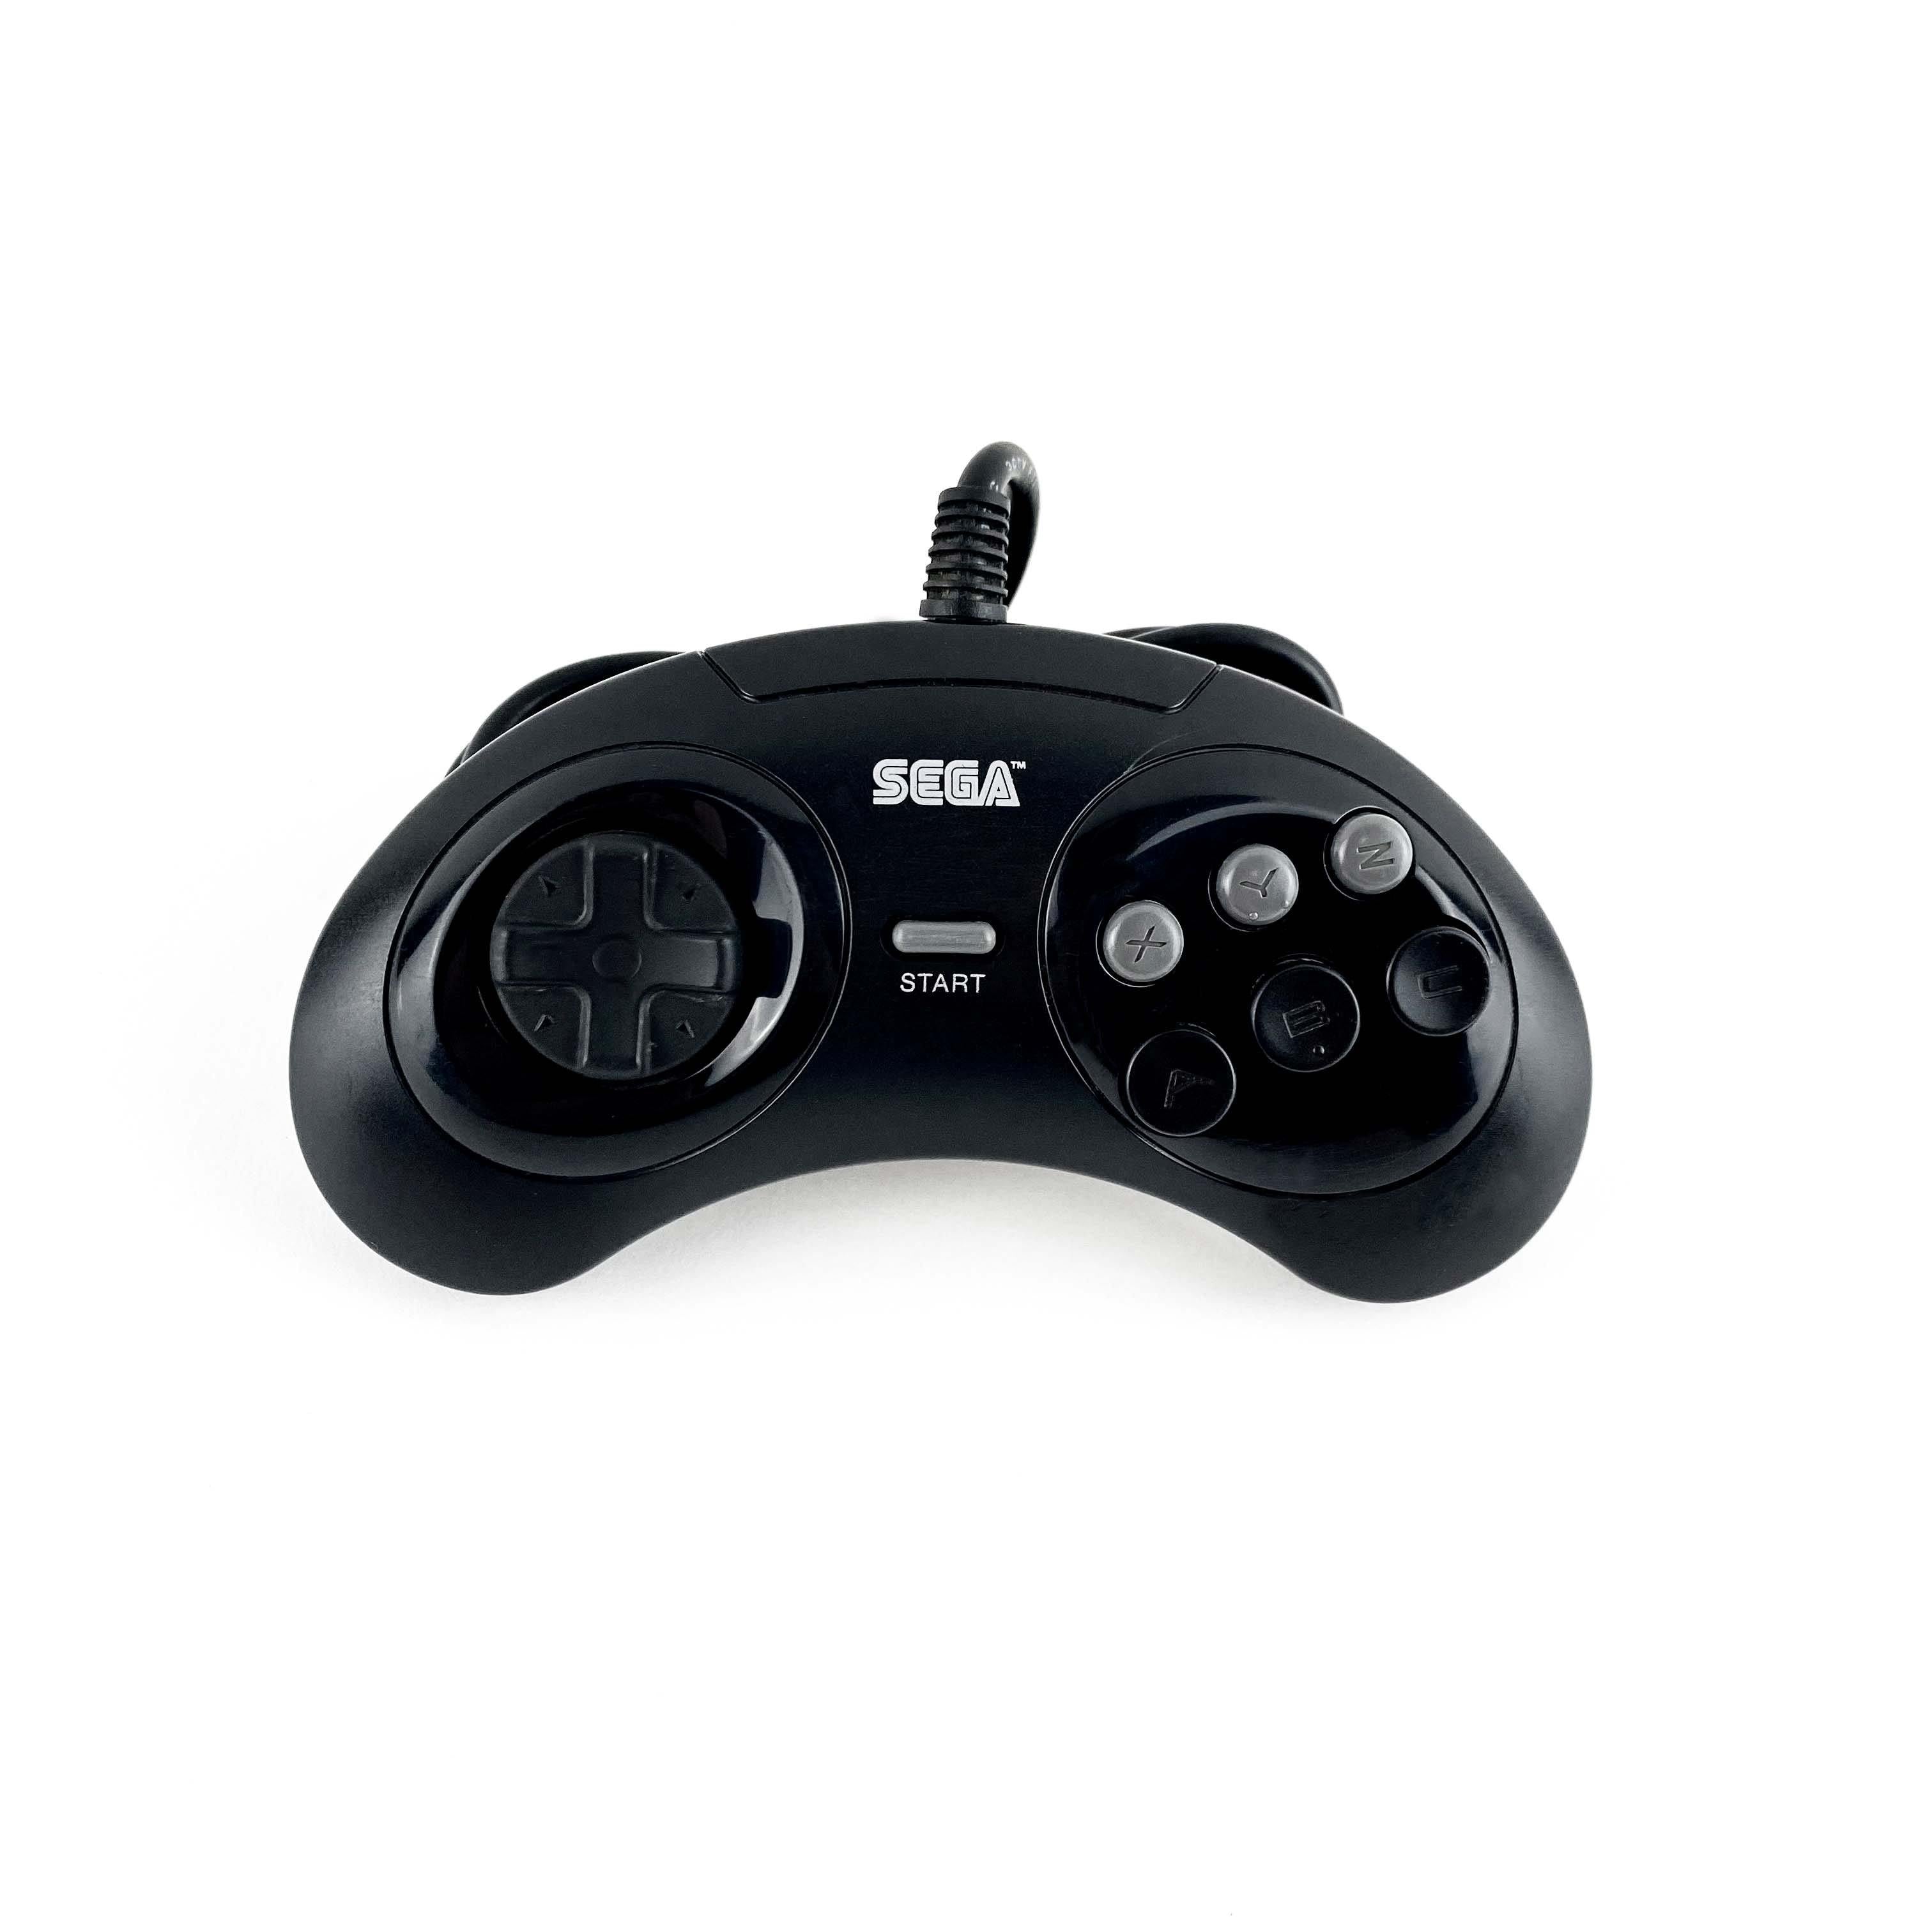 Sega Genesis 6 Button Controller Gamepad (MK-1653)